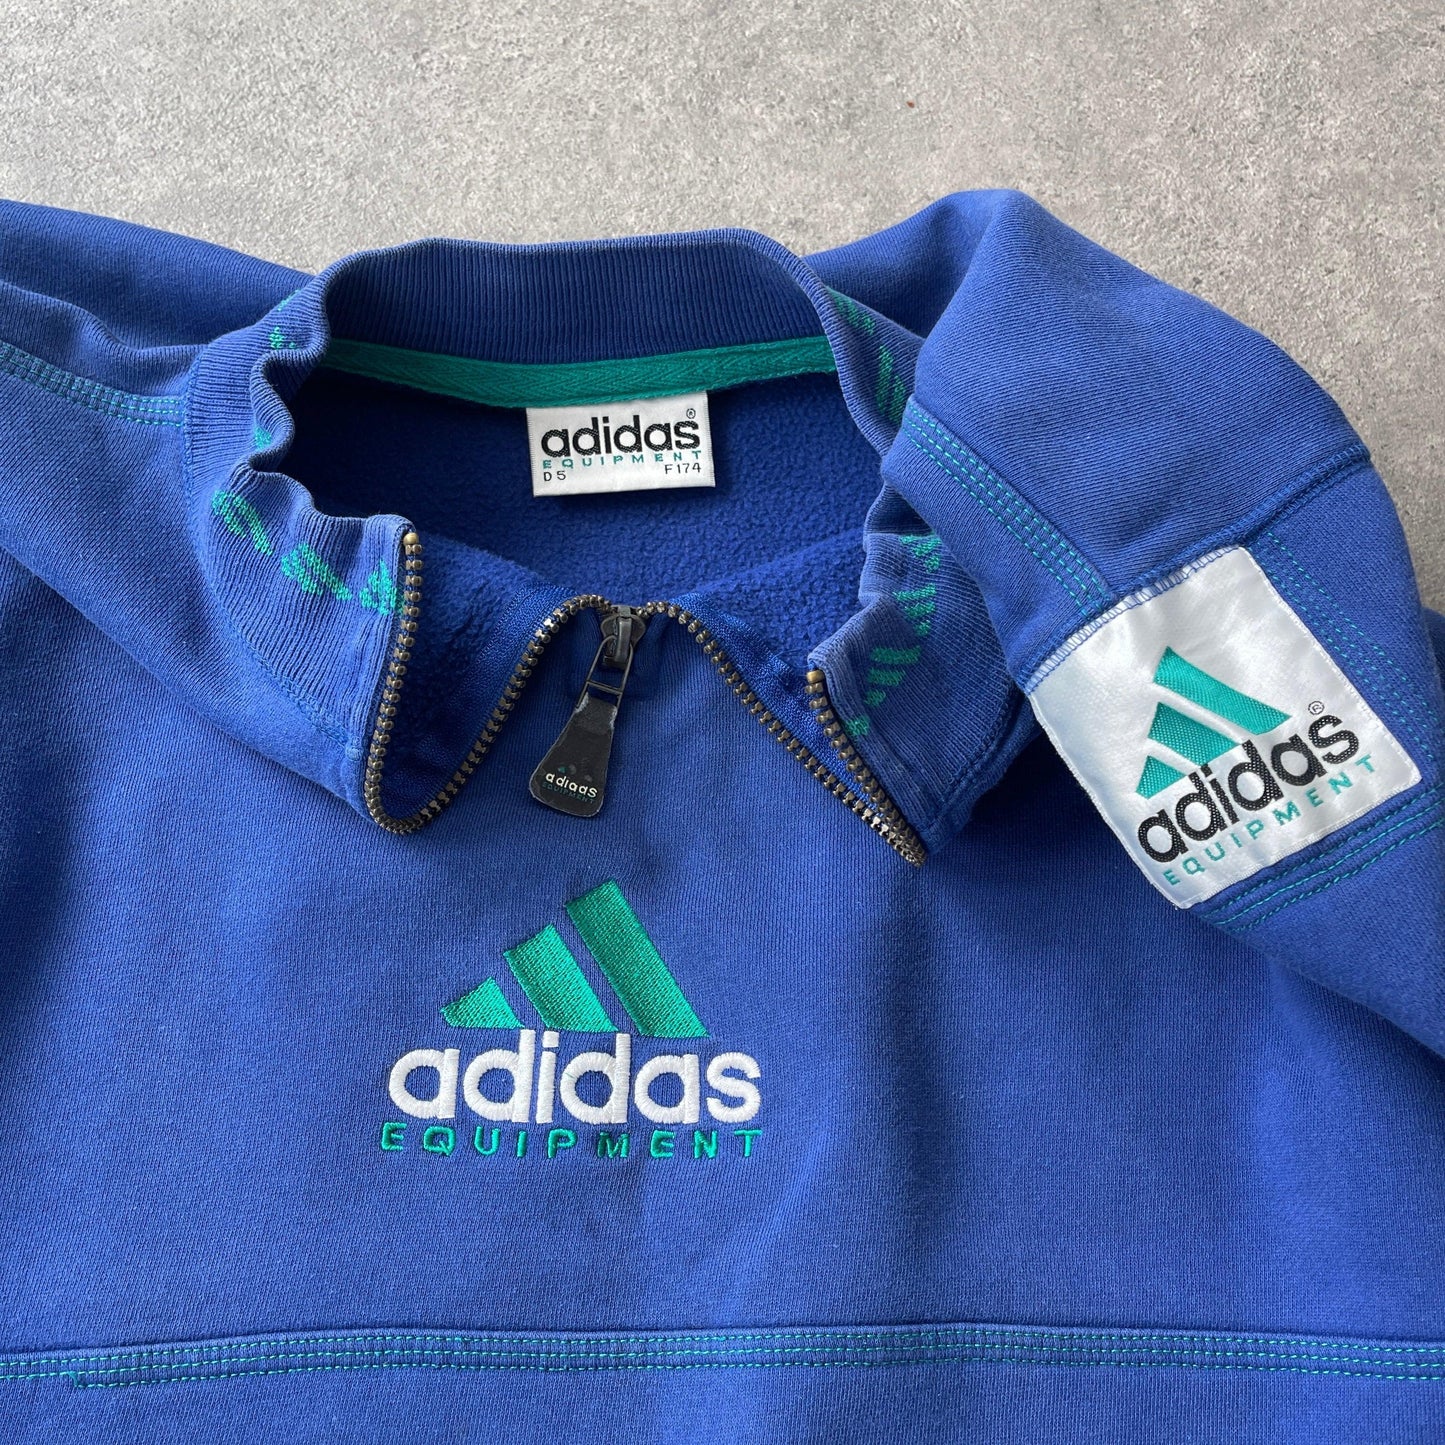 Adidas Equipment RARE 1990s heavyweight embroidered sweatshirt (M) - Known Source